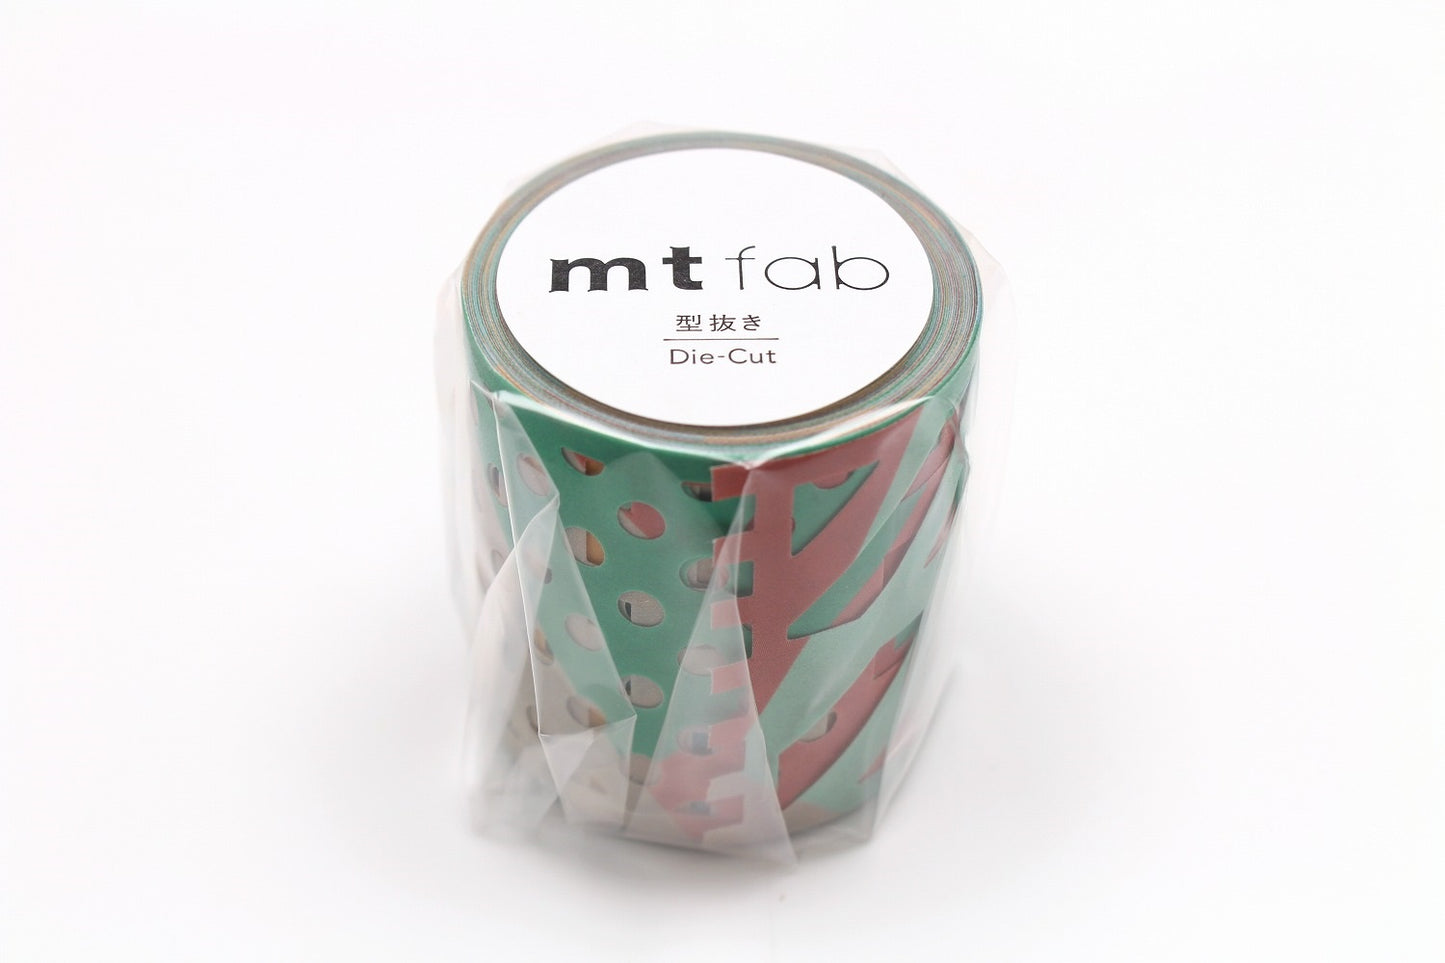 mt fab color & pattern block Die Cut Japanese Washi Tape Masking Tape